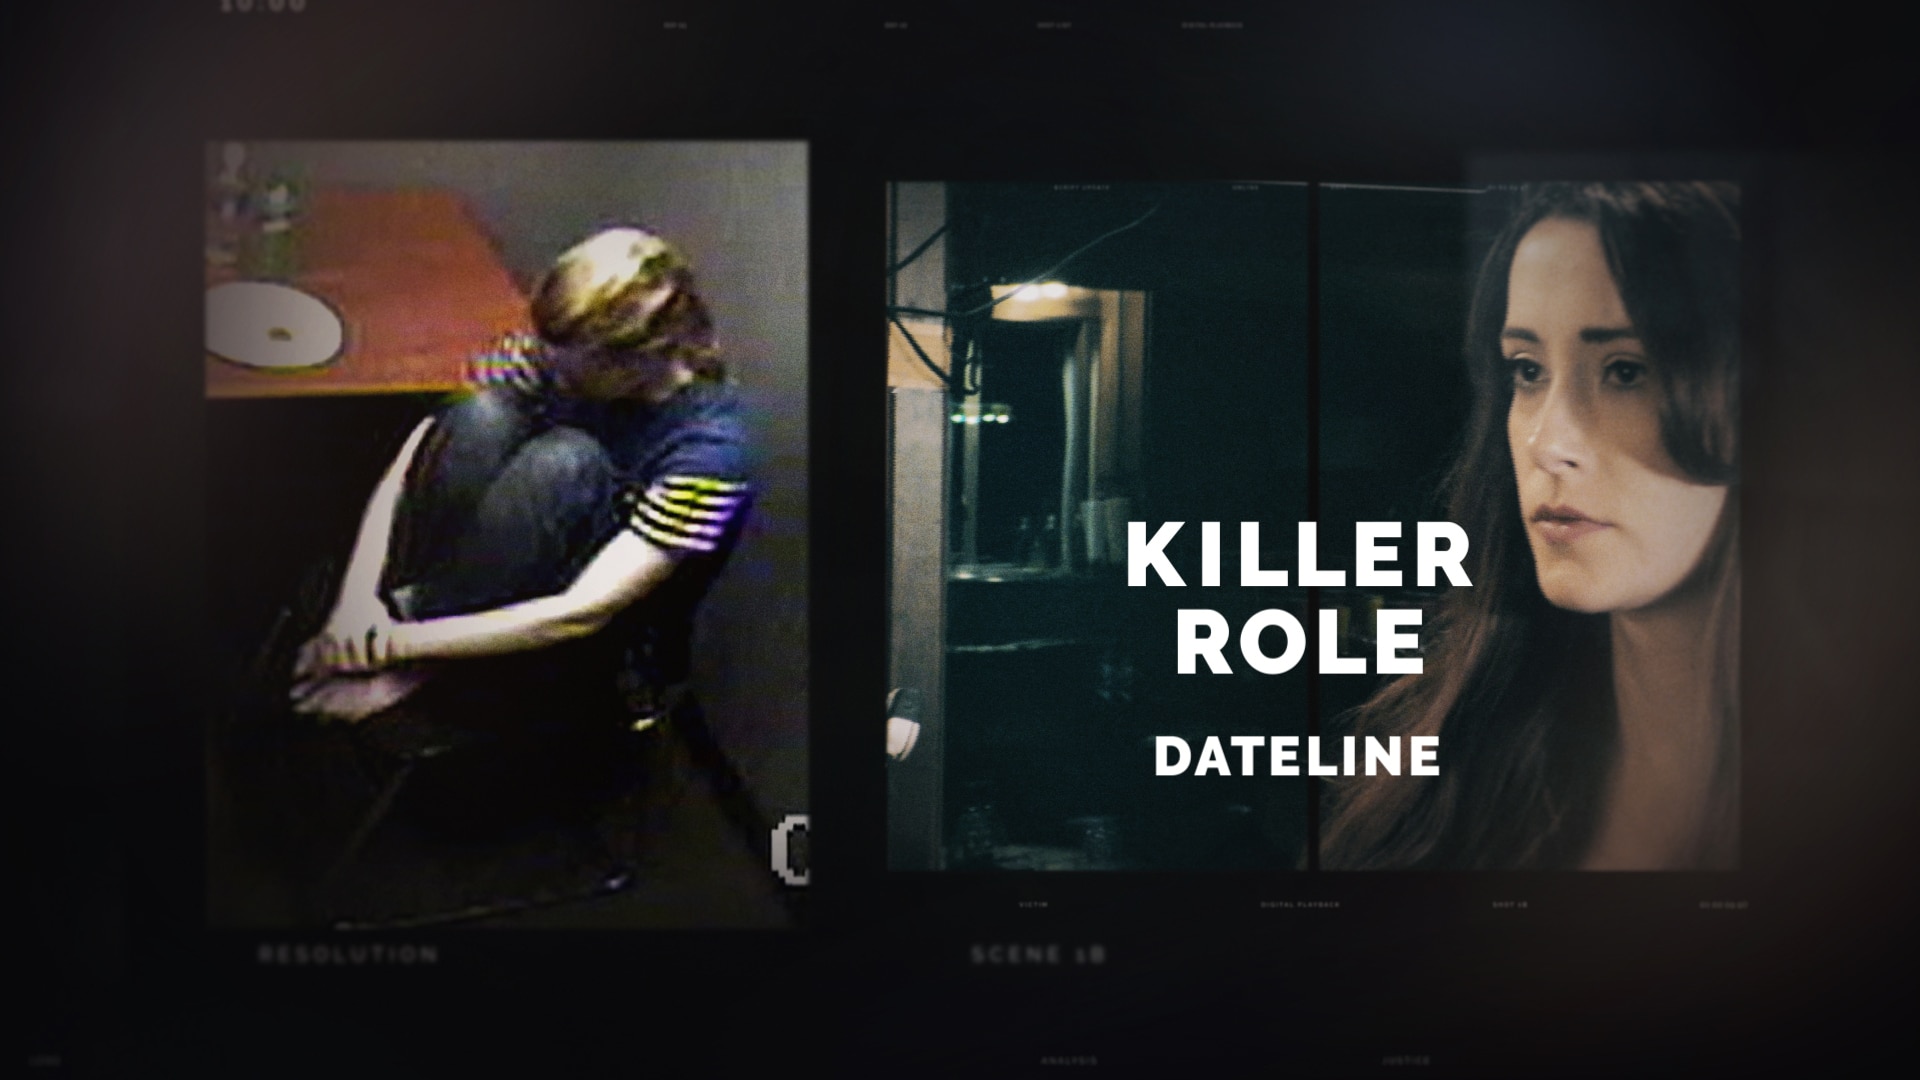 Watch Dateline Episode: Killer Role - NBC.com